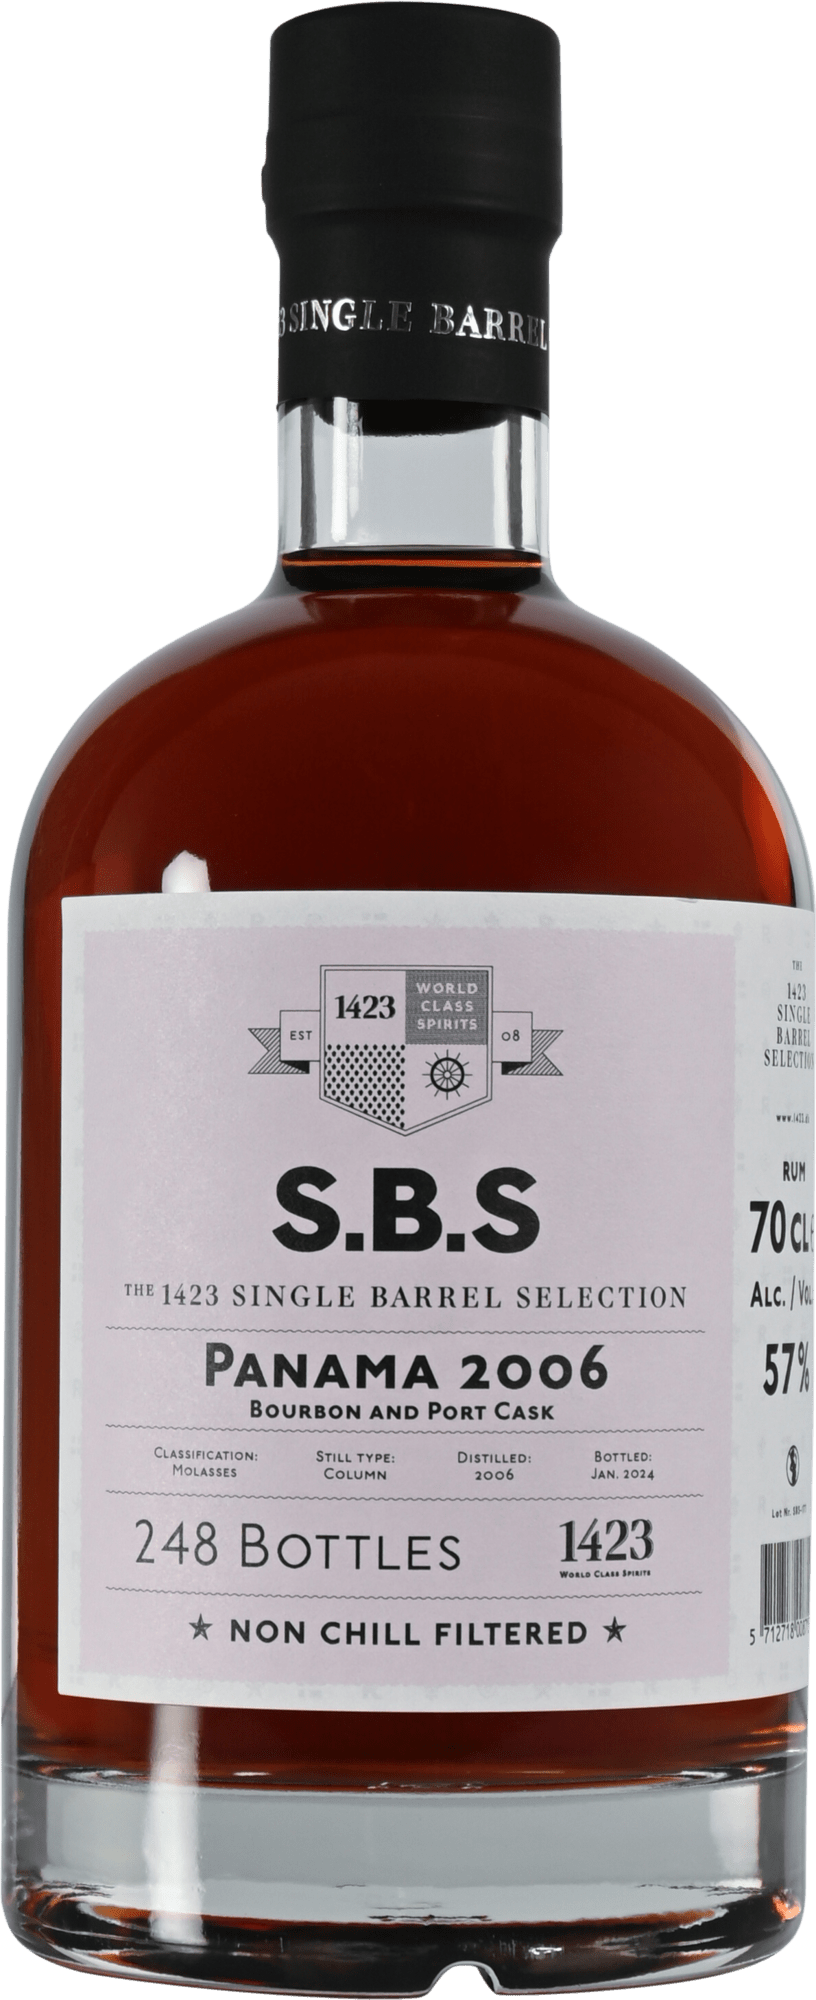 S.B.S Panama 2006 Varela, GIFT